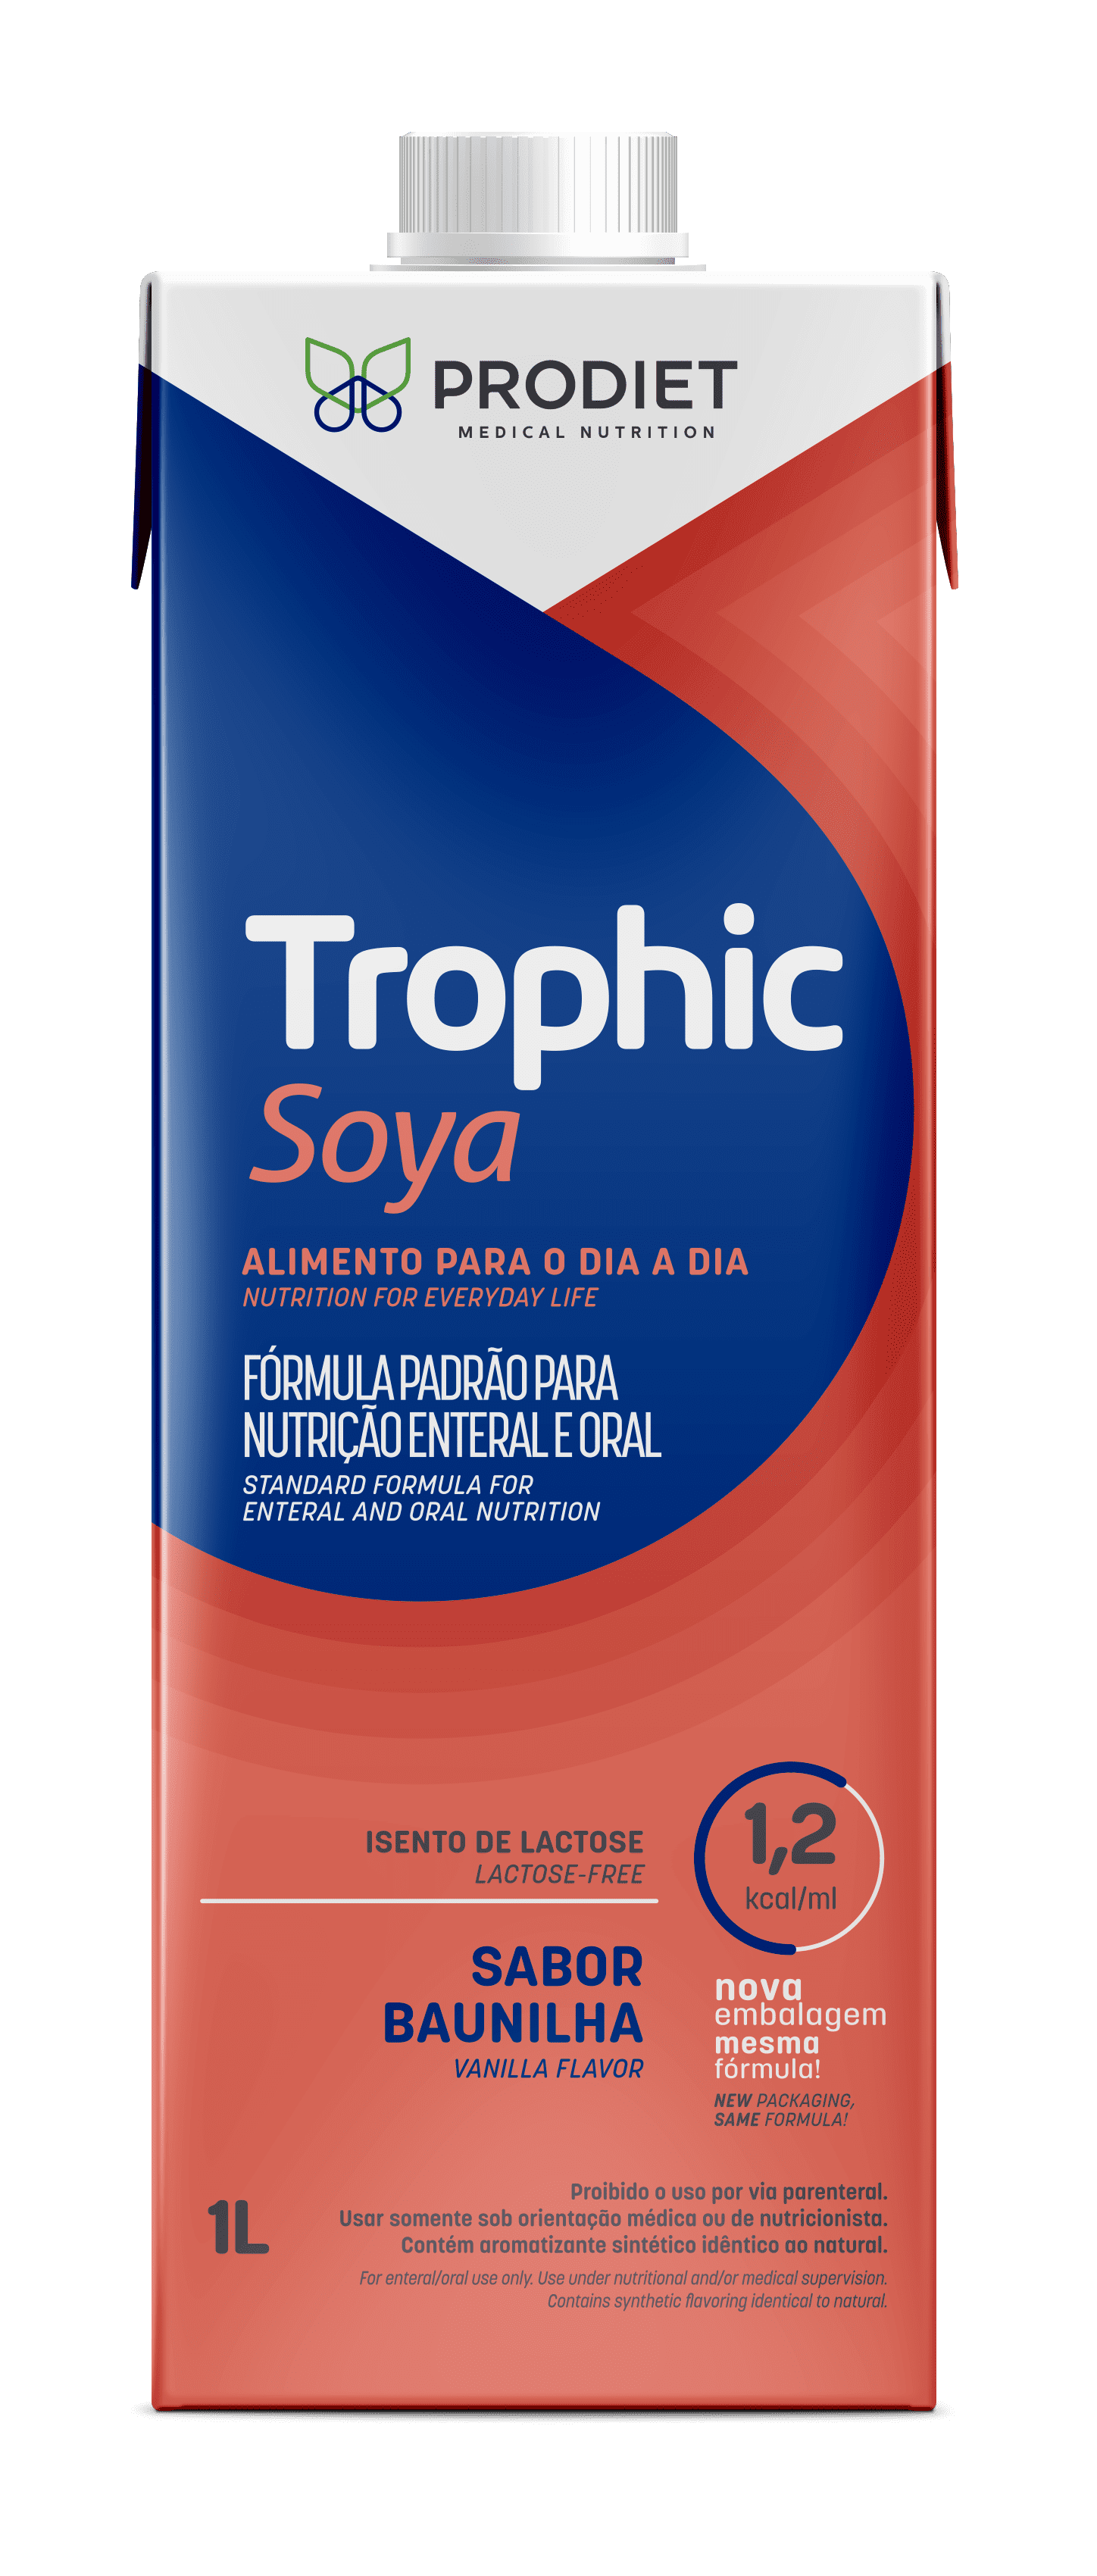 Trophic Soya - Prodiet